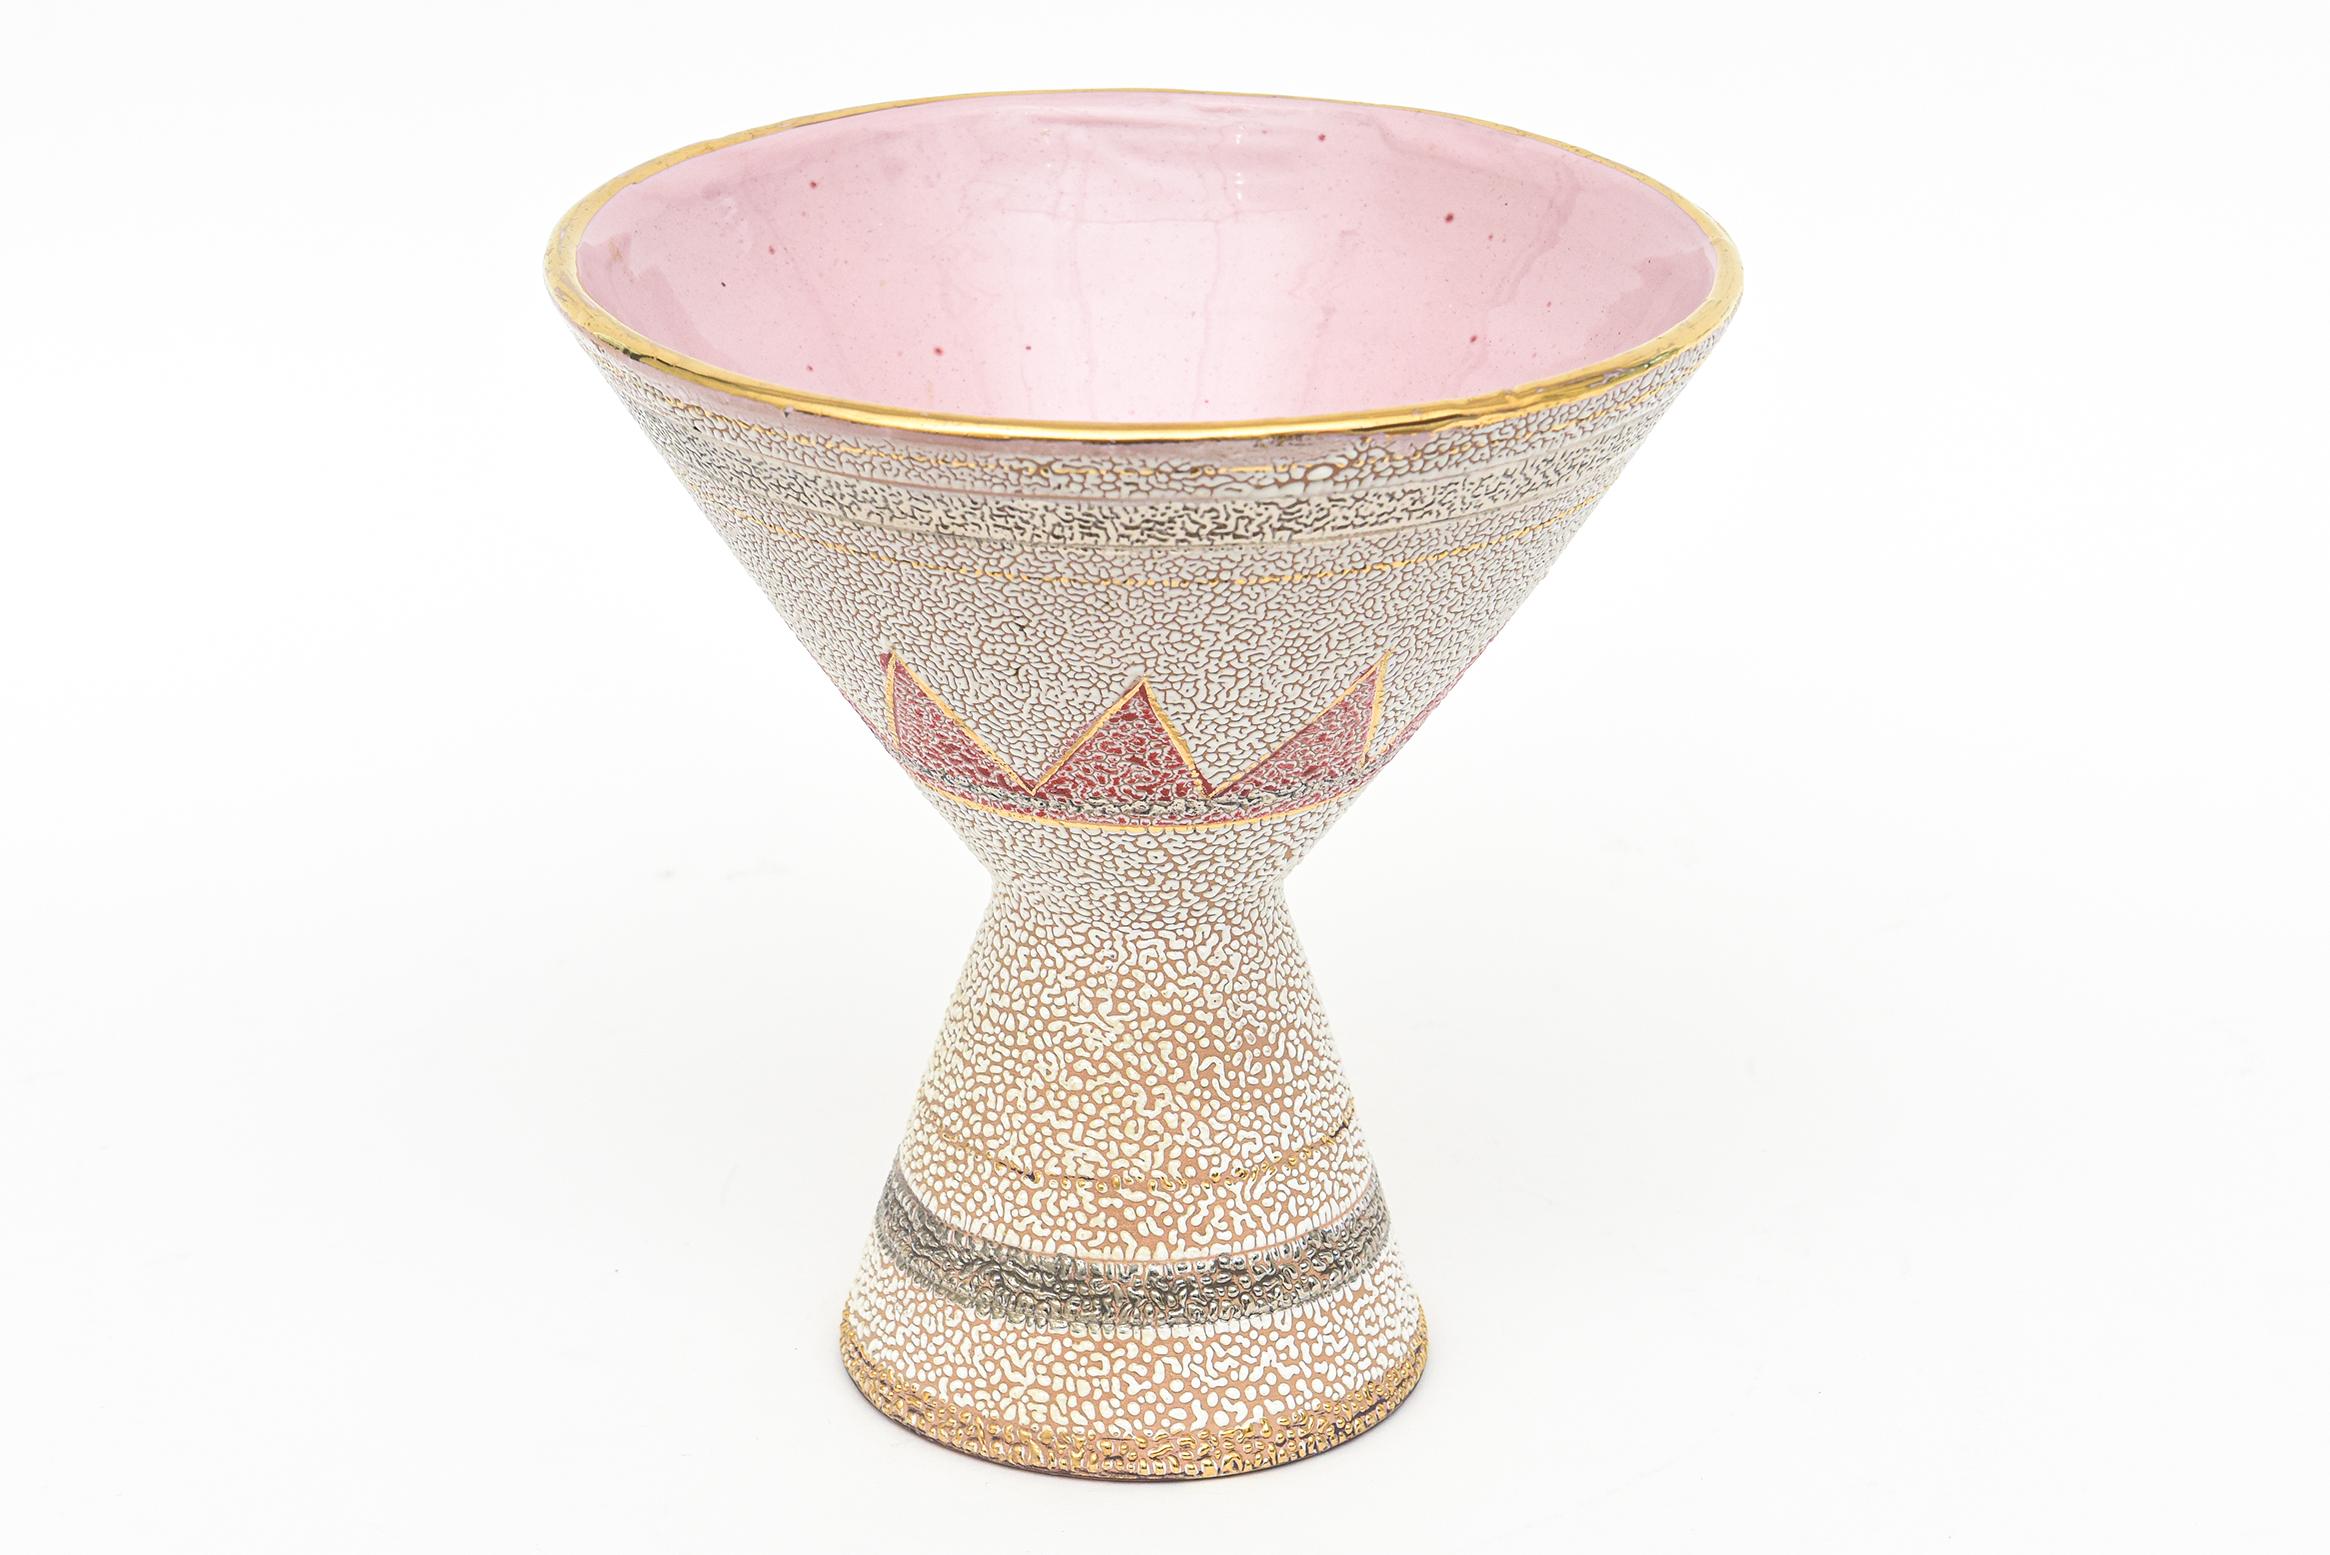 Italian Vintage Aldo Londi Bitossi Seta Taza Compote Bowl Pink, Silver, Gold  5